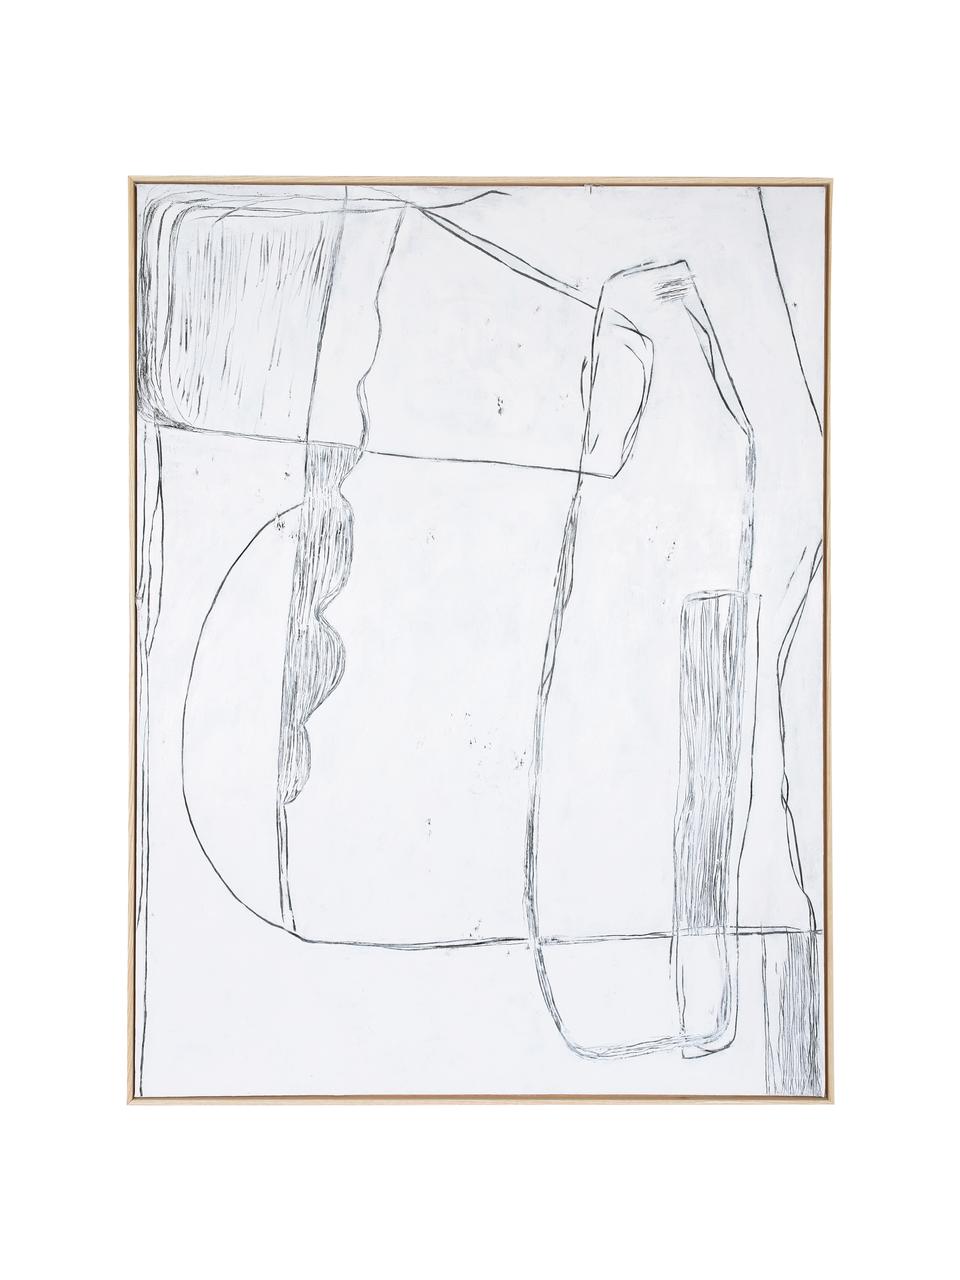 Gerahmtes Leinwandbild Brutalism, Bild: Leinwand, Farbe, Rahmen: Eschenholz, Weiß, Schwarz, B 120 x H 160 cm